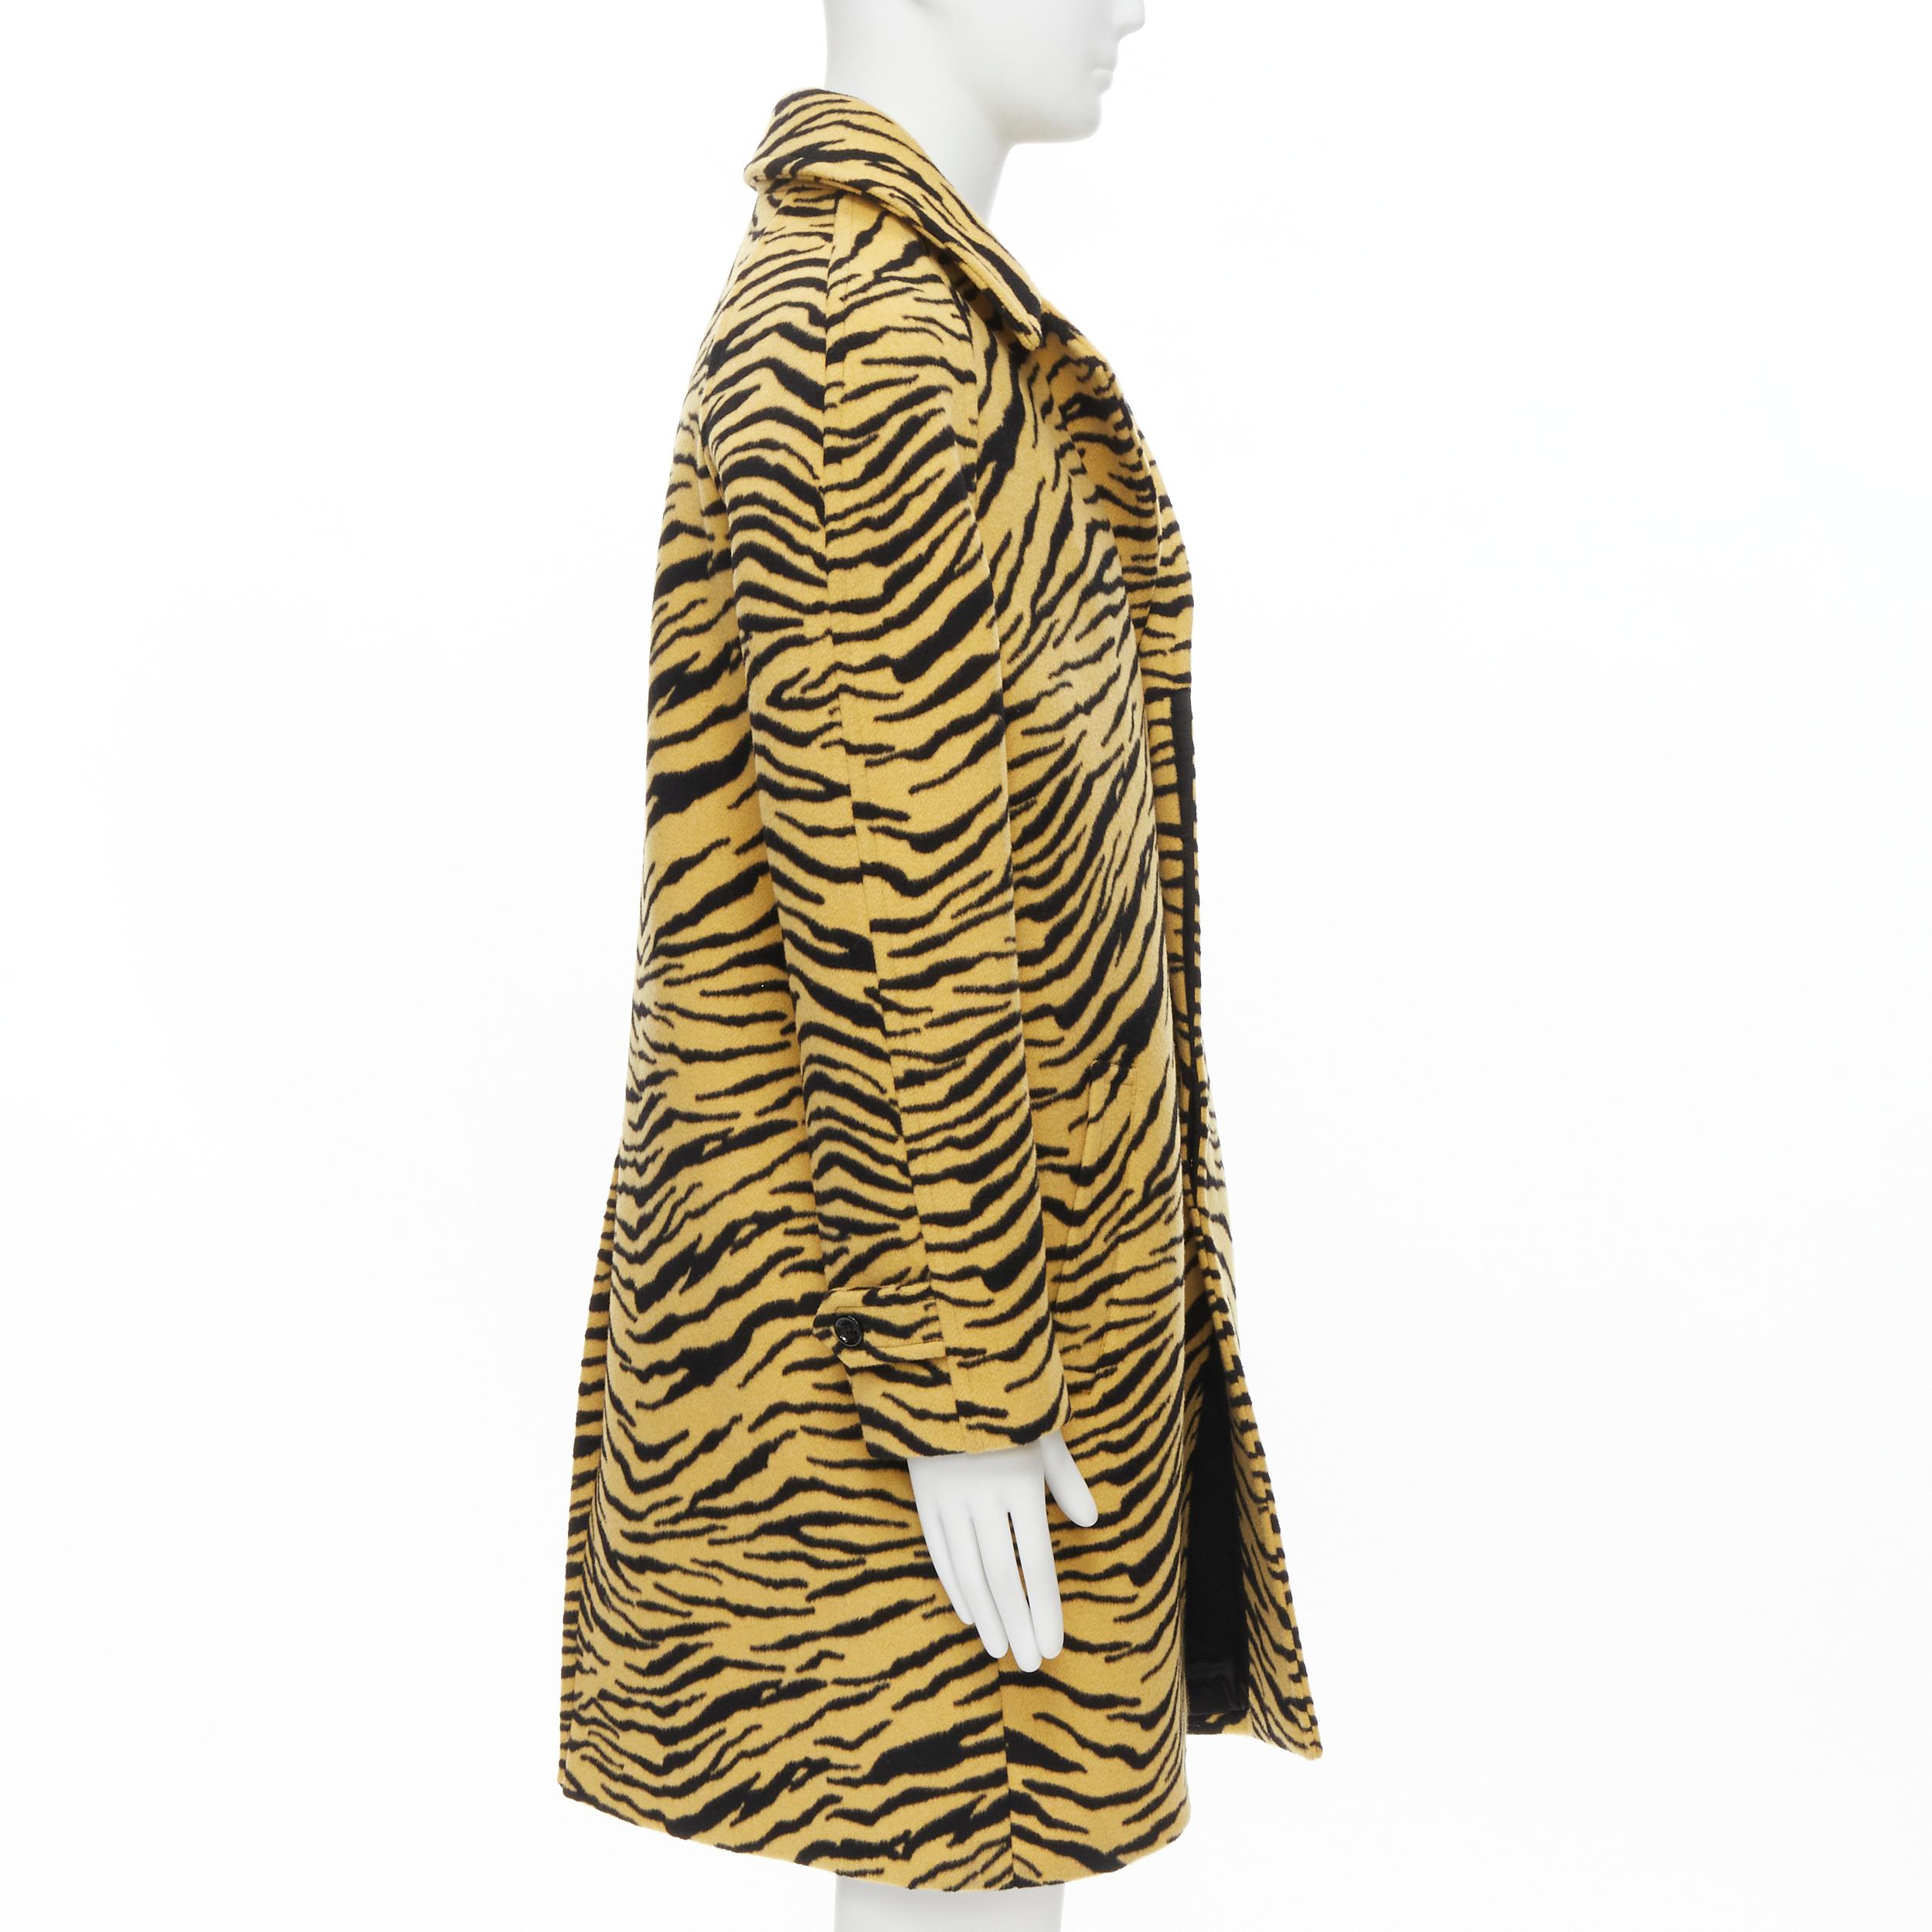 Beige new CELINE Hedi Slimane 2019 Runway wool felt yellow black tiger coat EU48 M